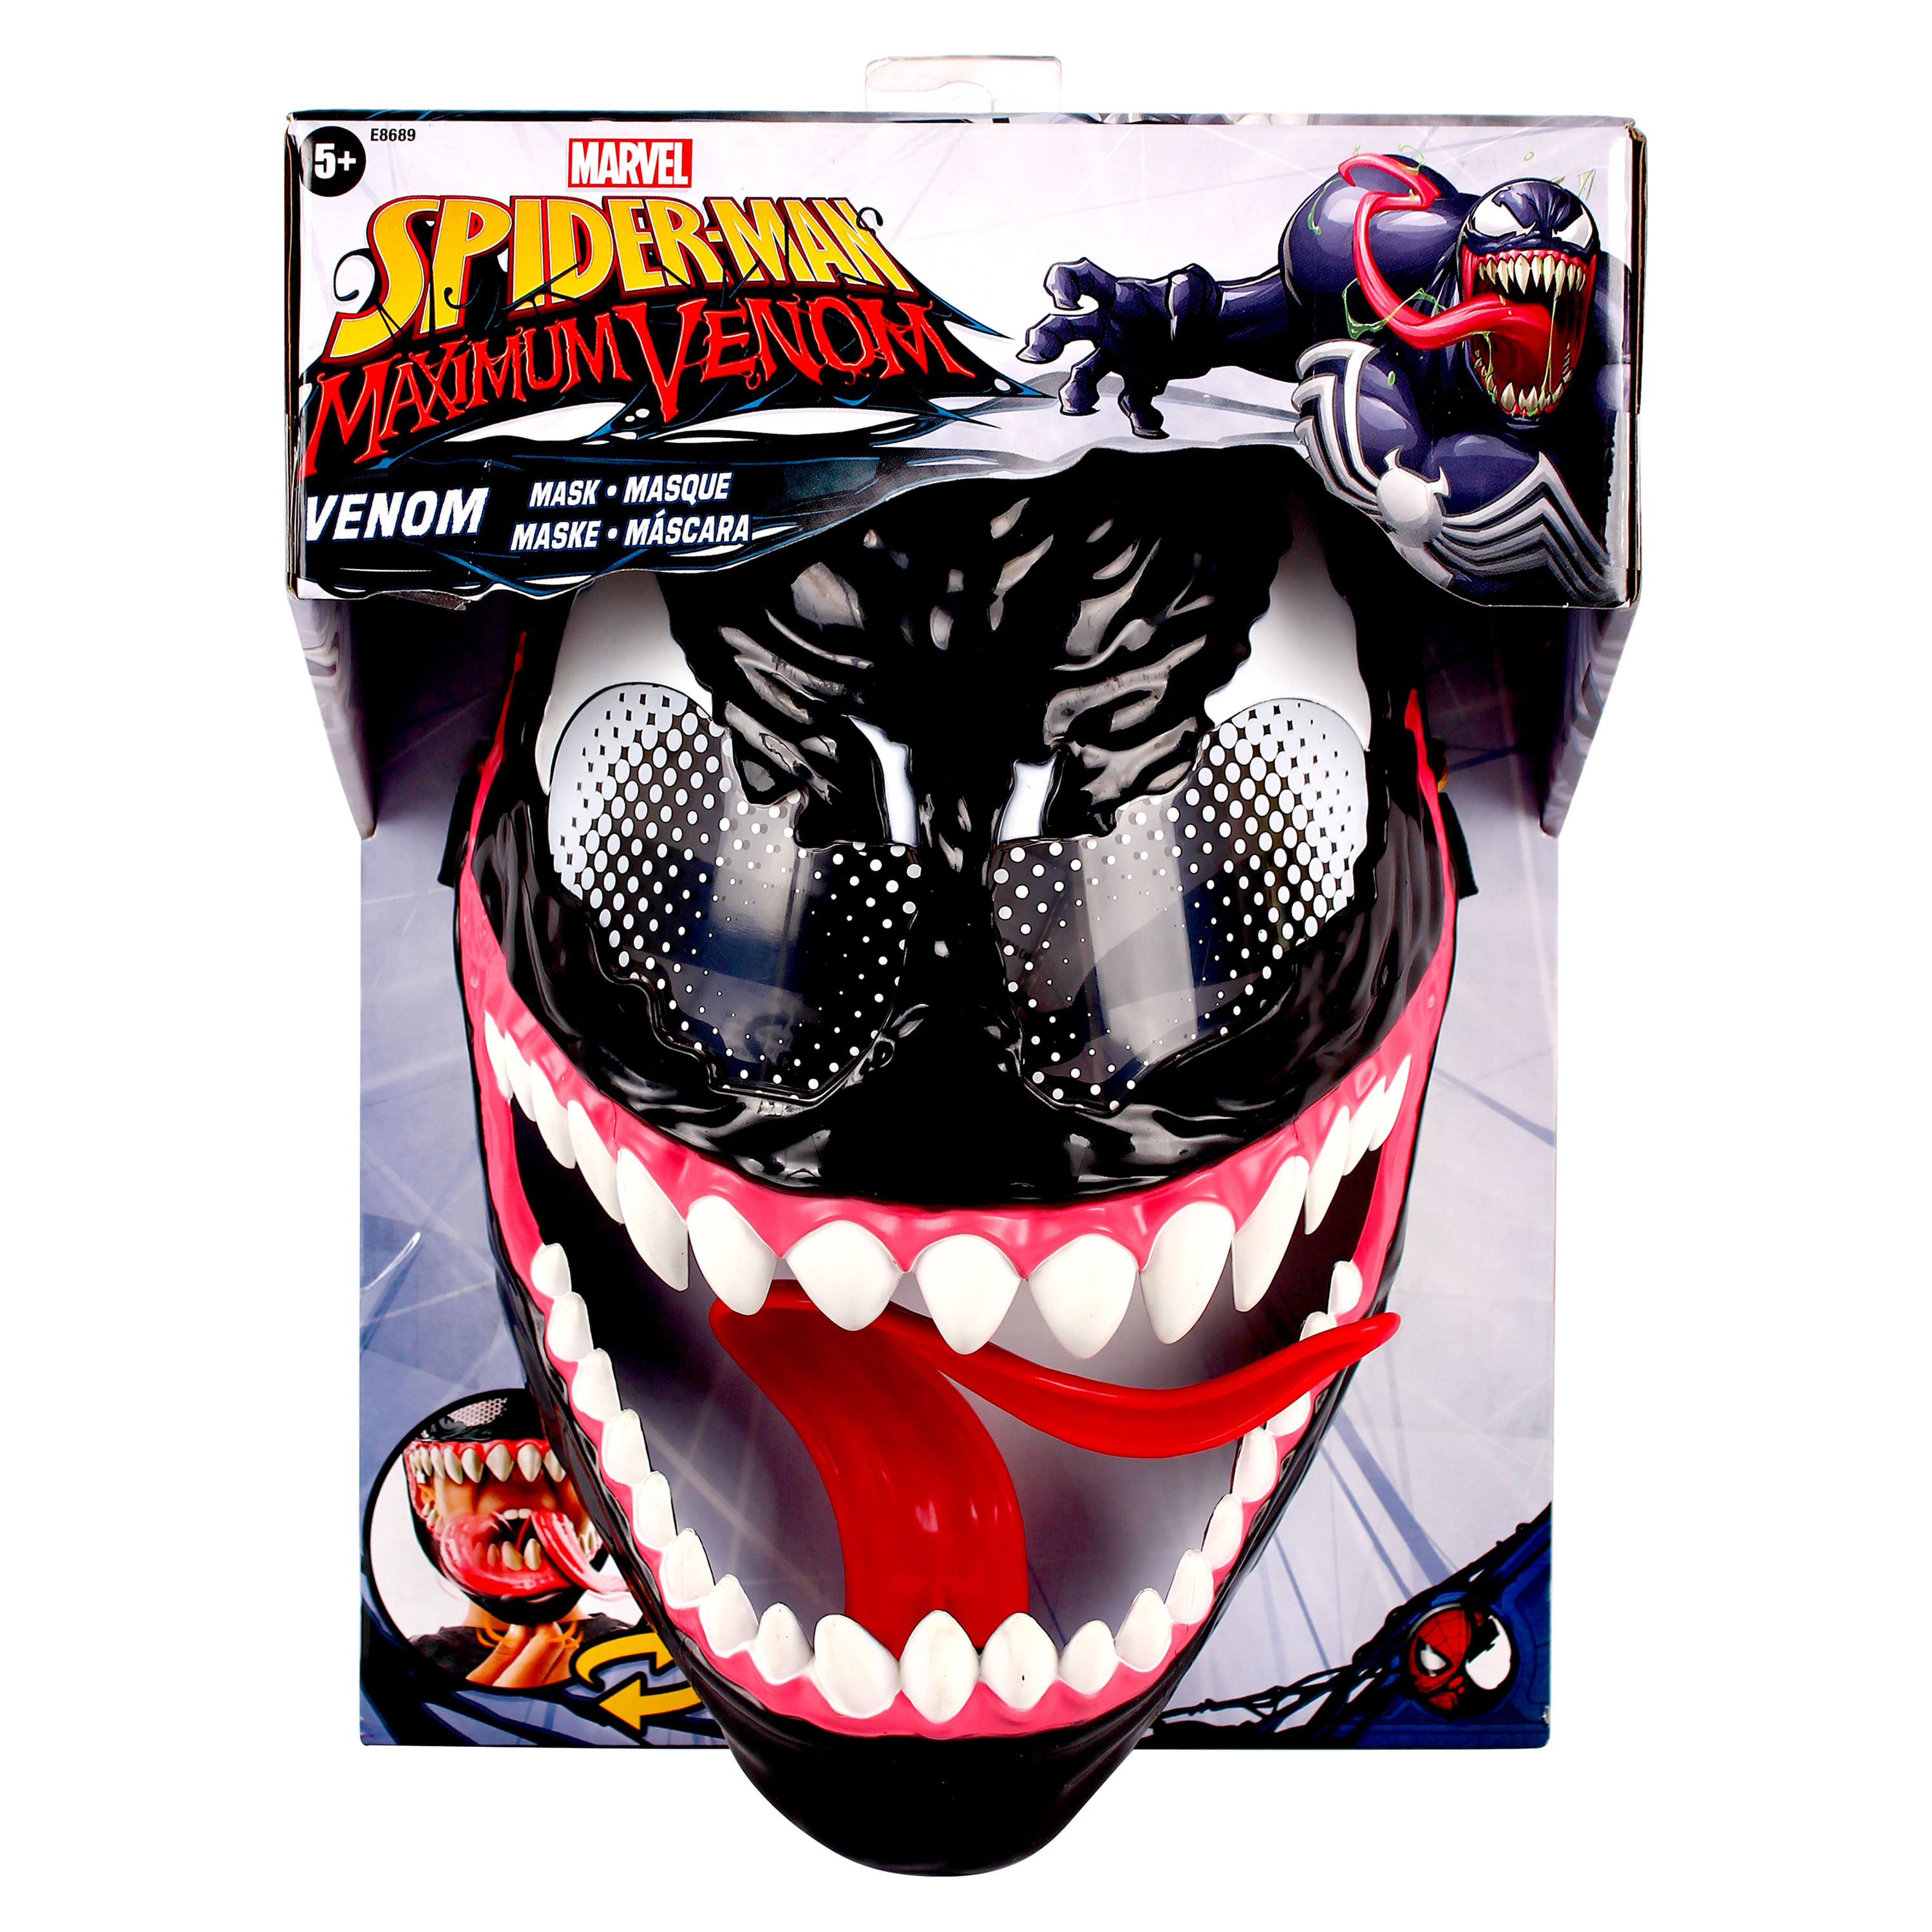 Comprar Spiderman De Maximum Venom | Walmart El Salvador